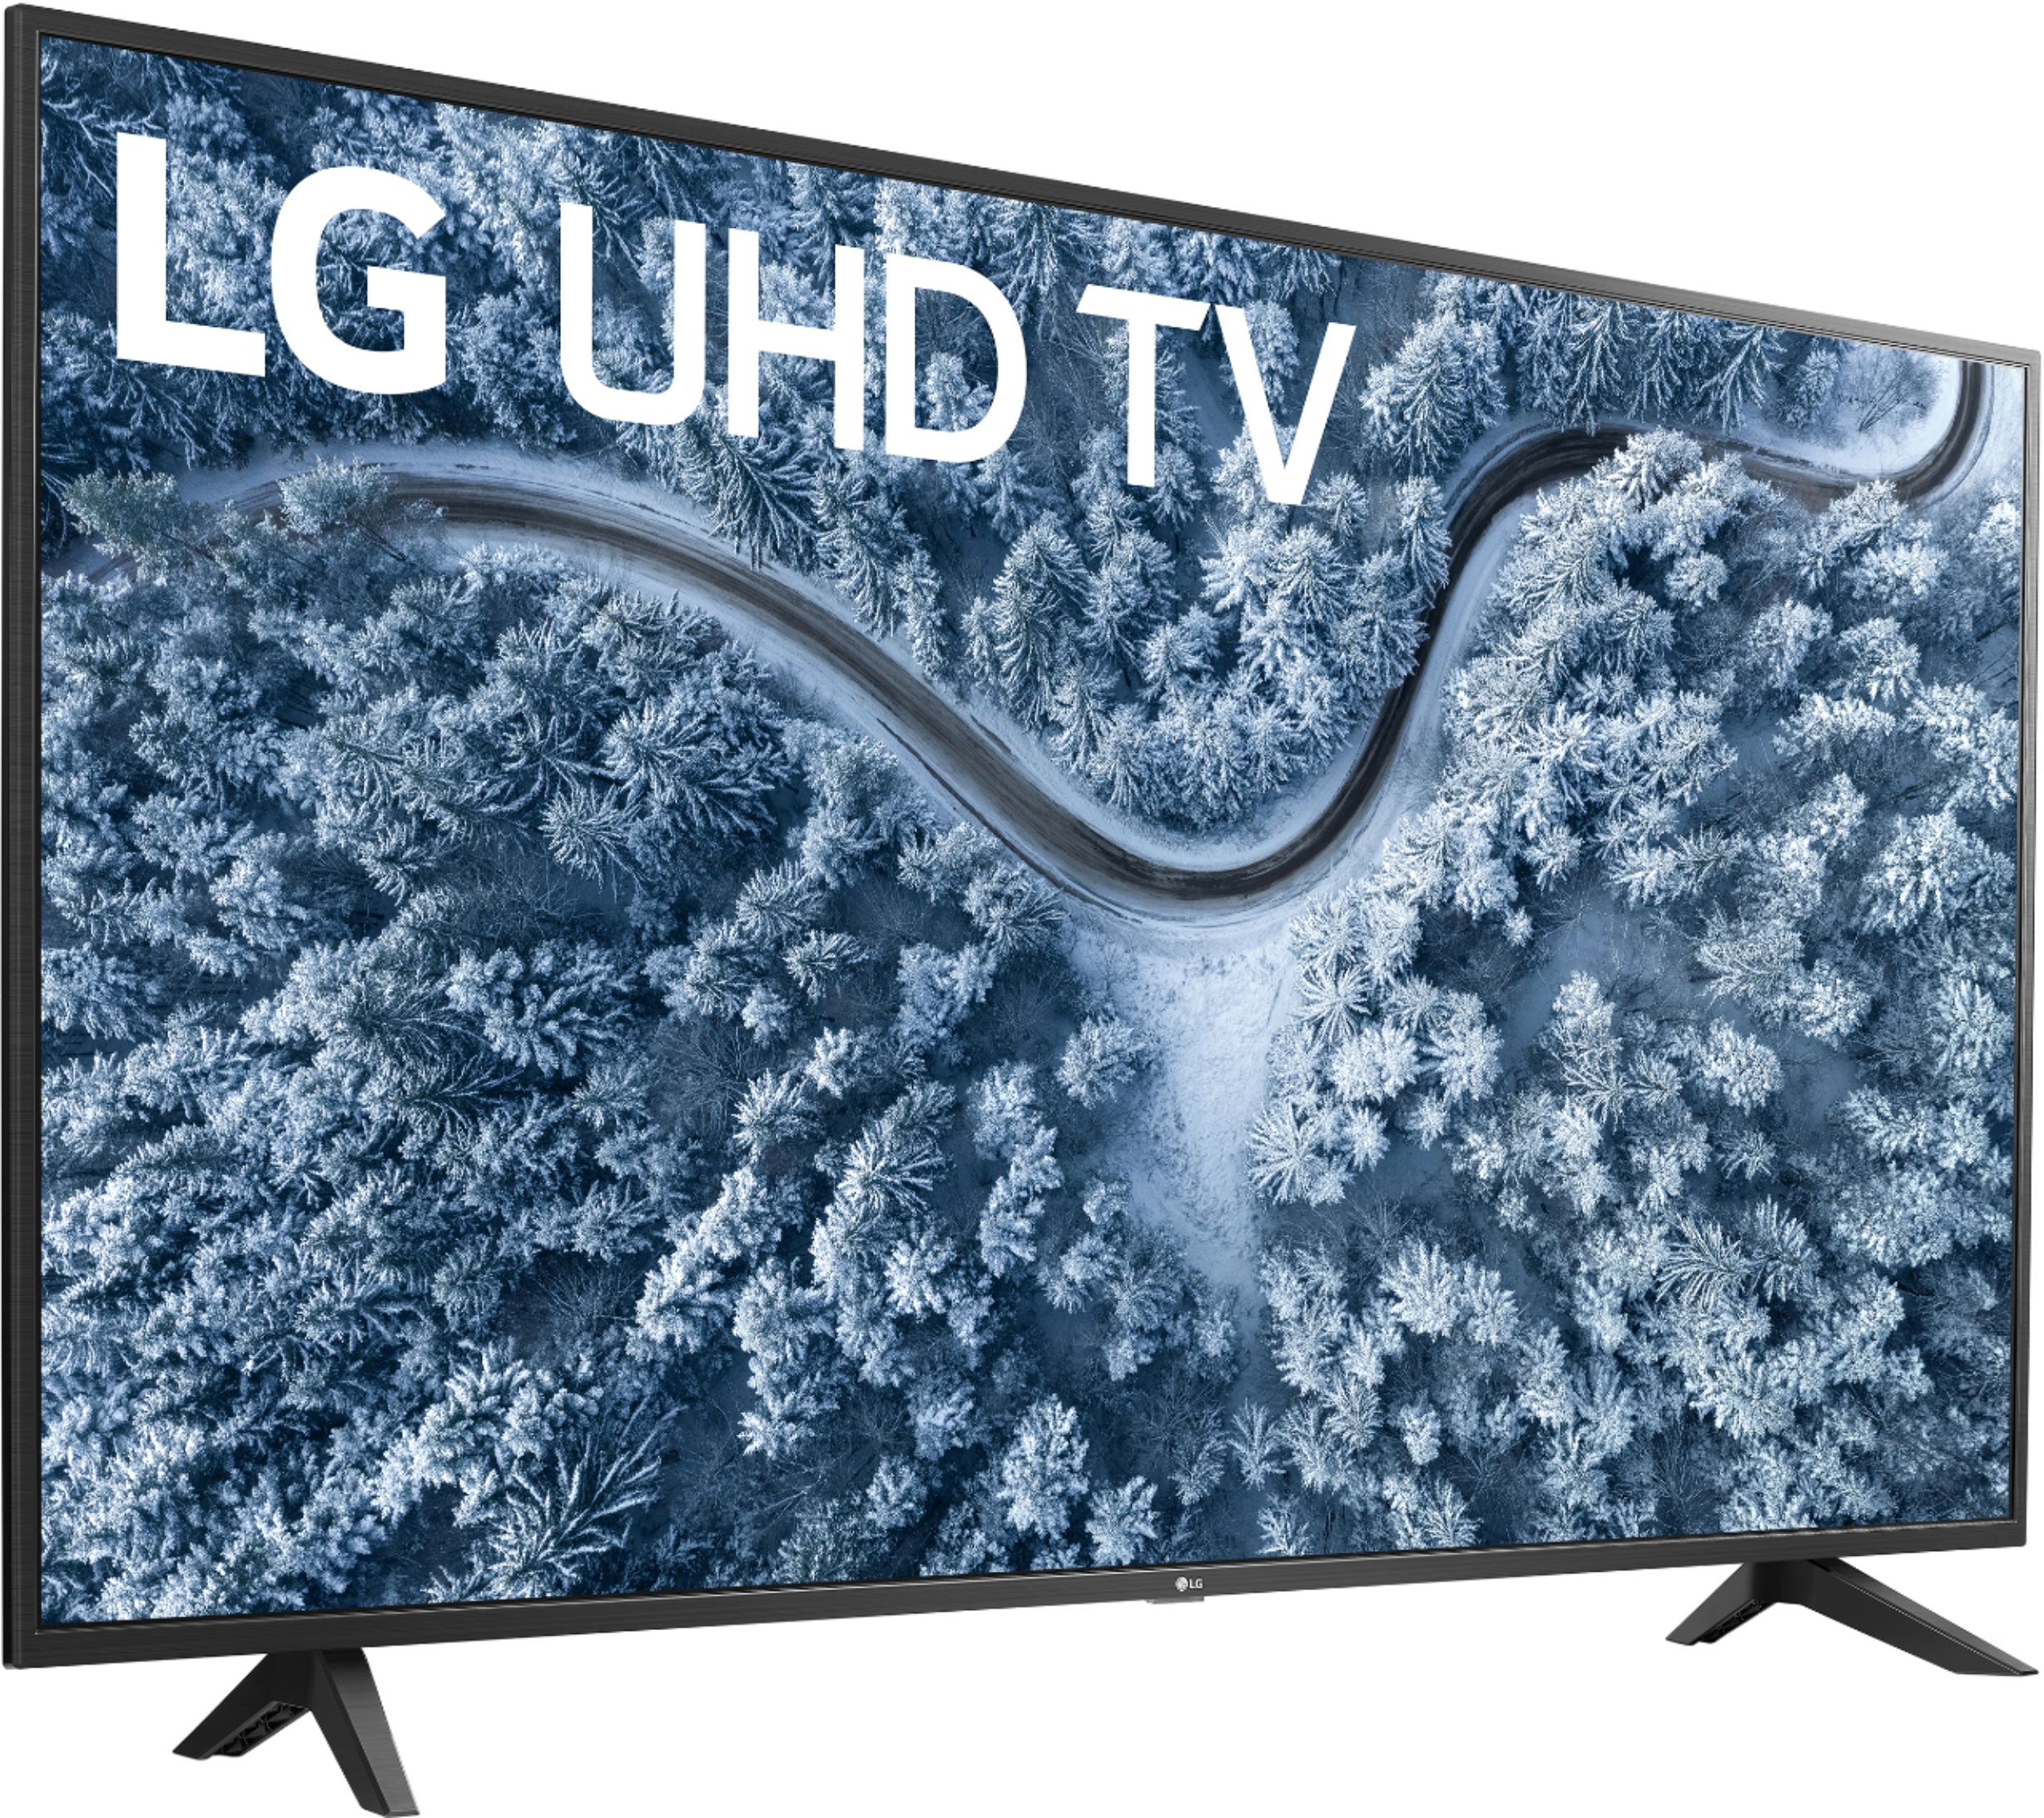 LG 65” Class UP7000 Series LED 4K UHD Smart webOS TV 65UP7000PUA - Best Buy